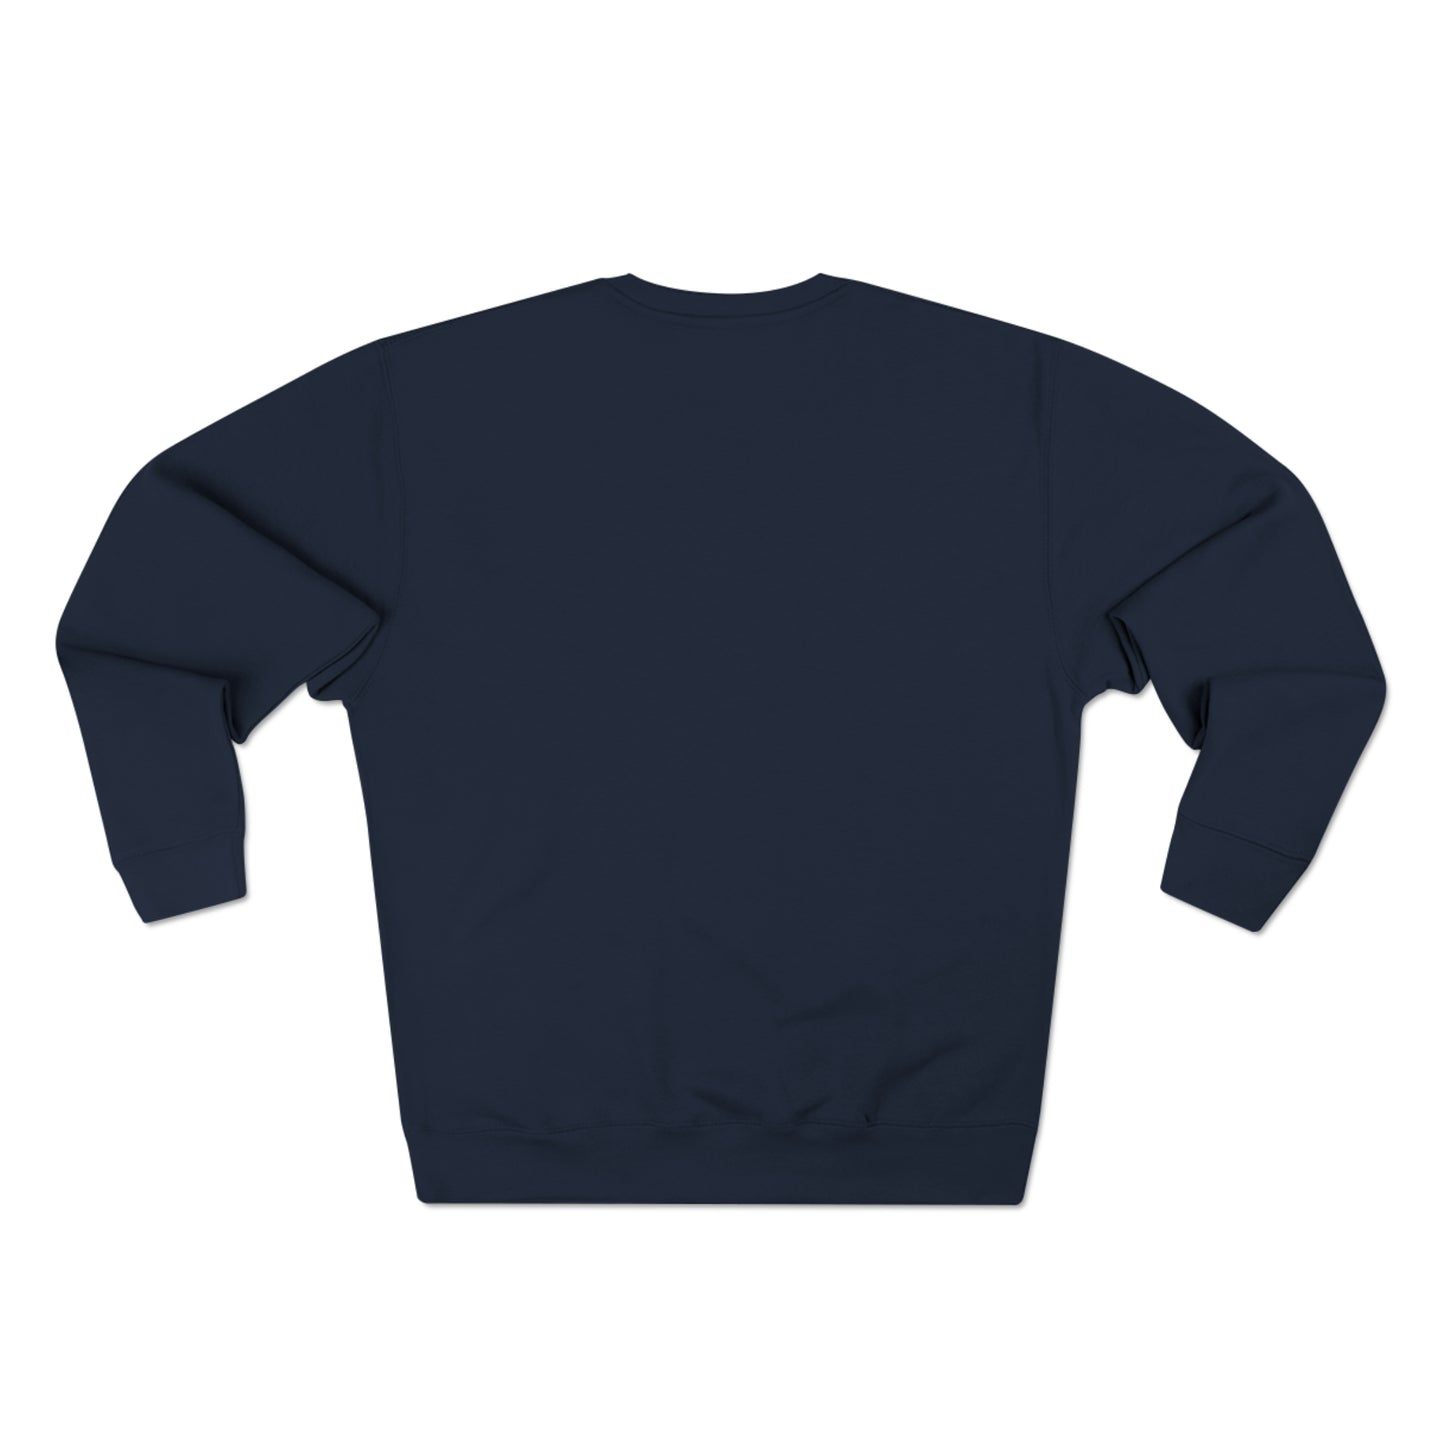 GoJoe Collection Unisex Crewneck Sweatshirt